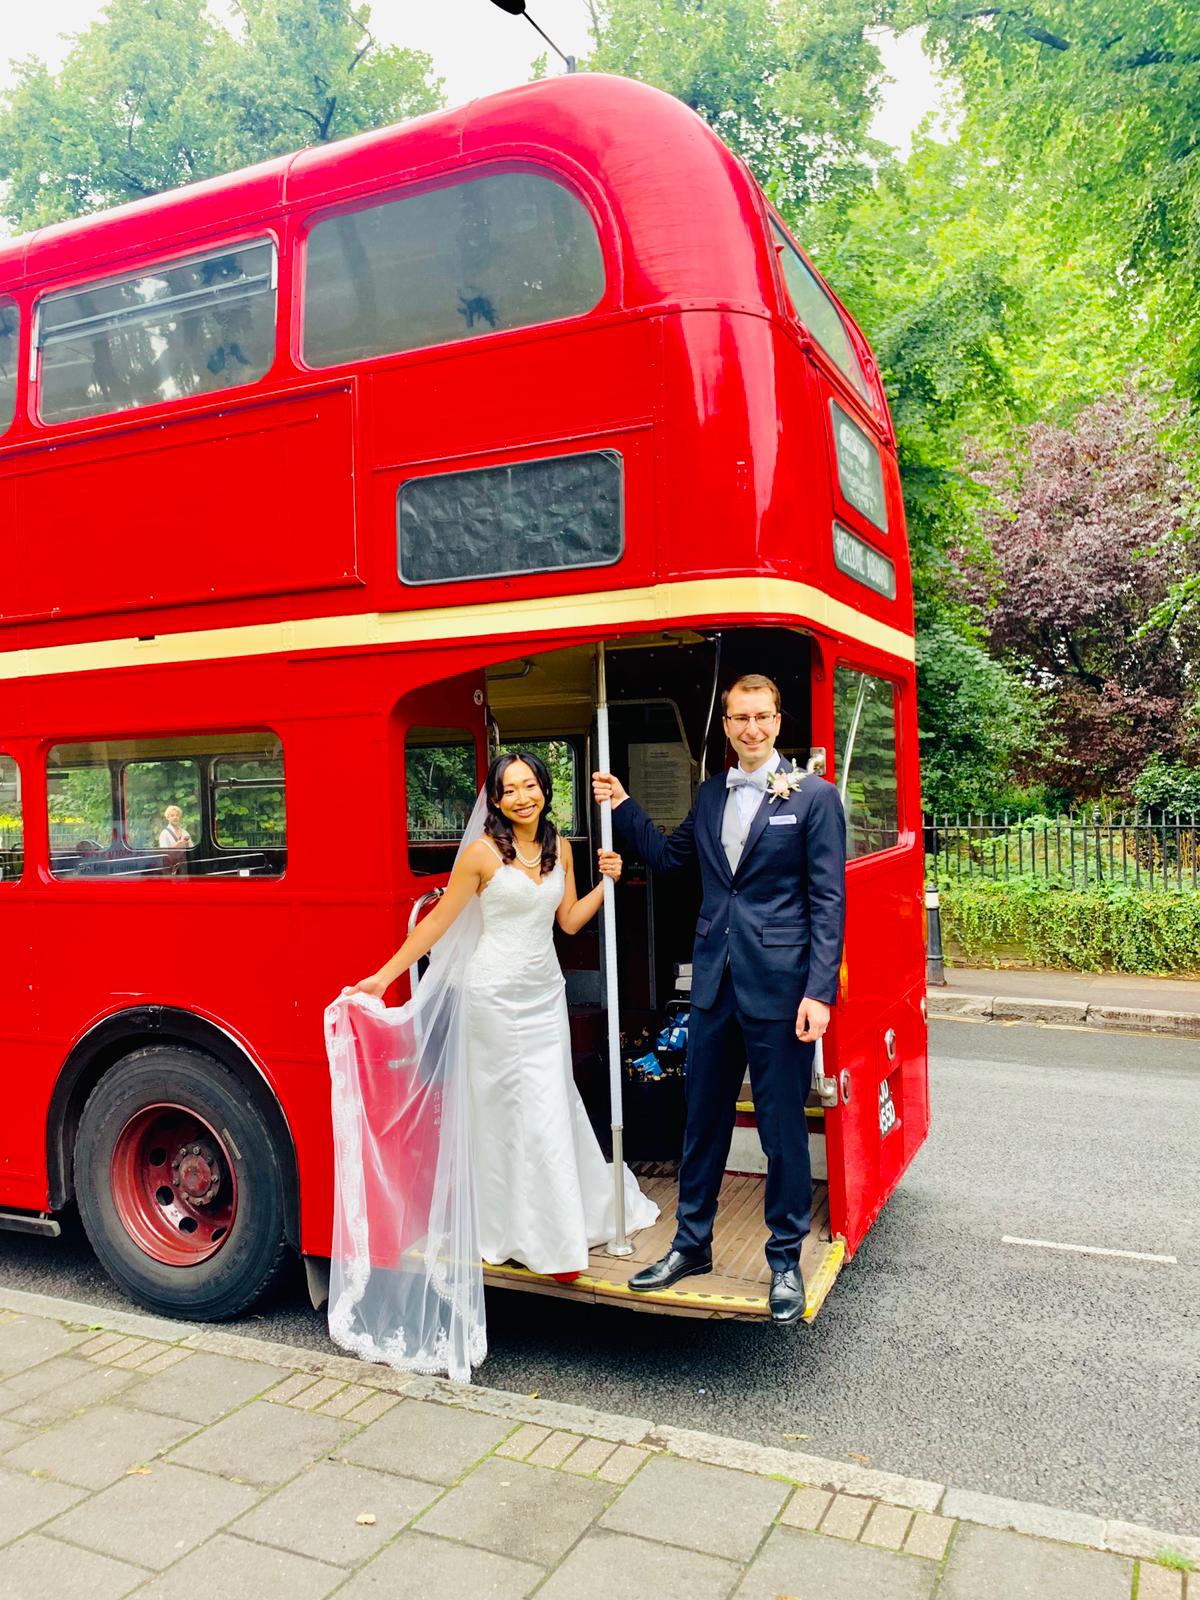 Wedding bus hire London